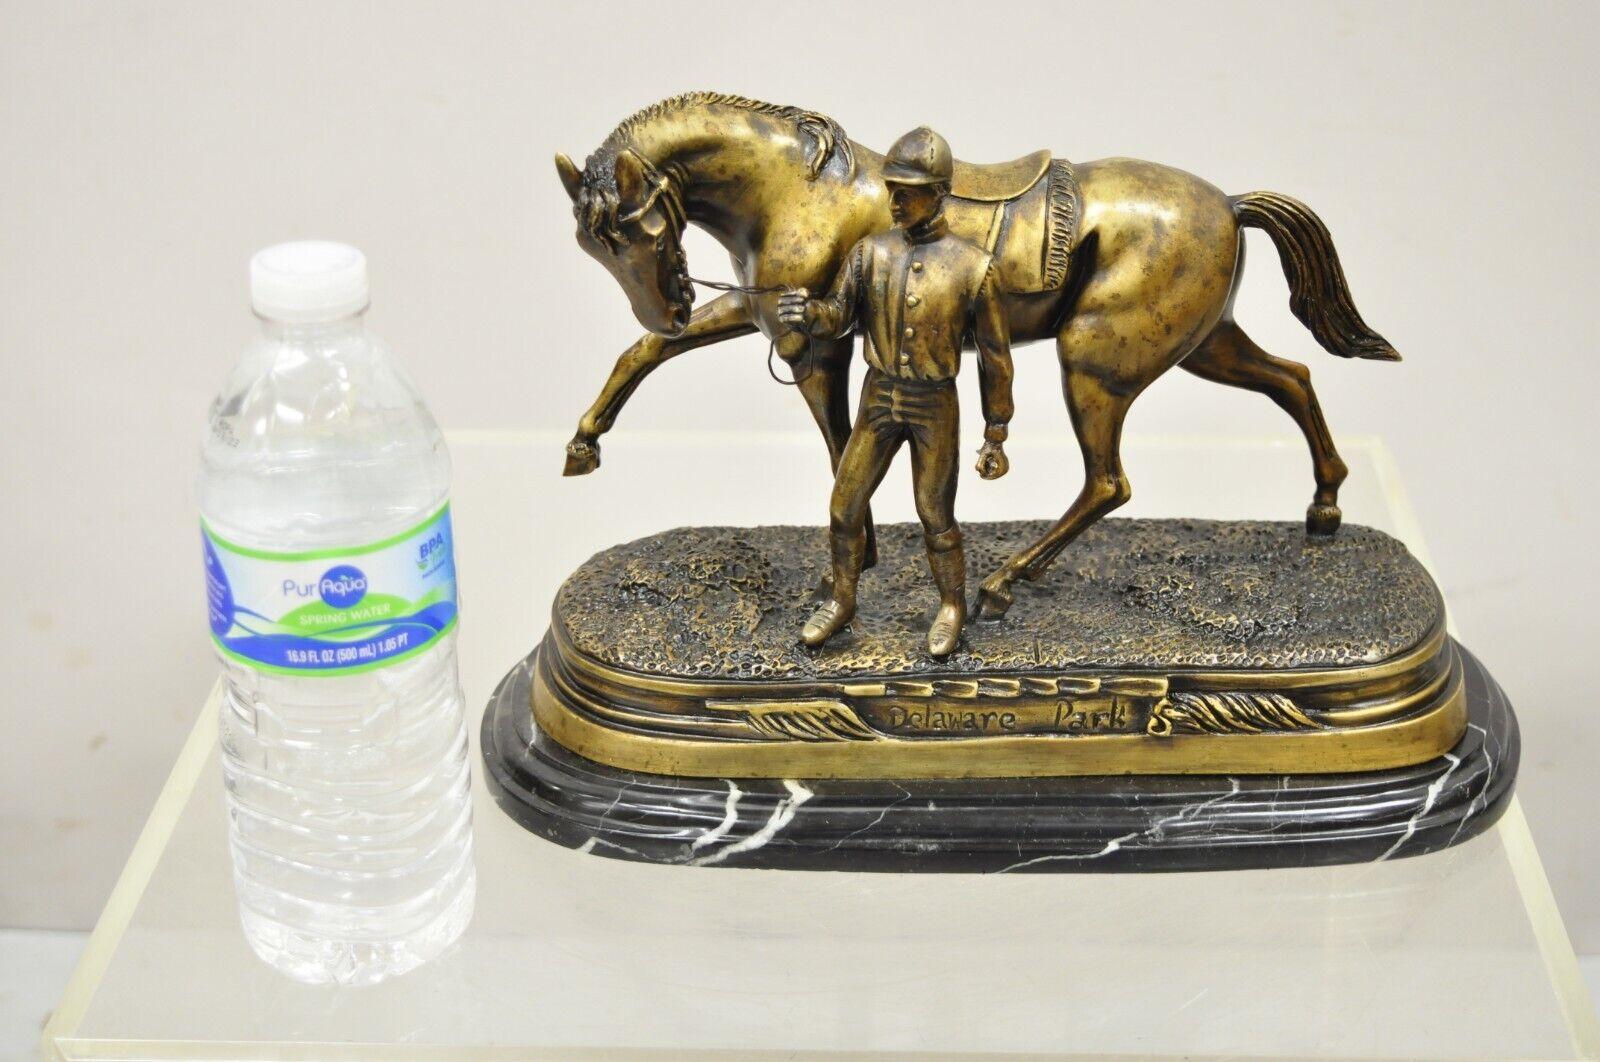 Delaware Park Bronze Equestrian Rider Jockey and Horse Marble Base Sculpture 1